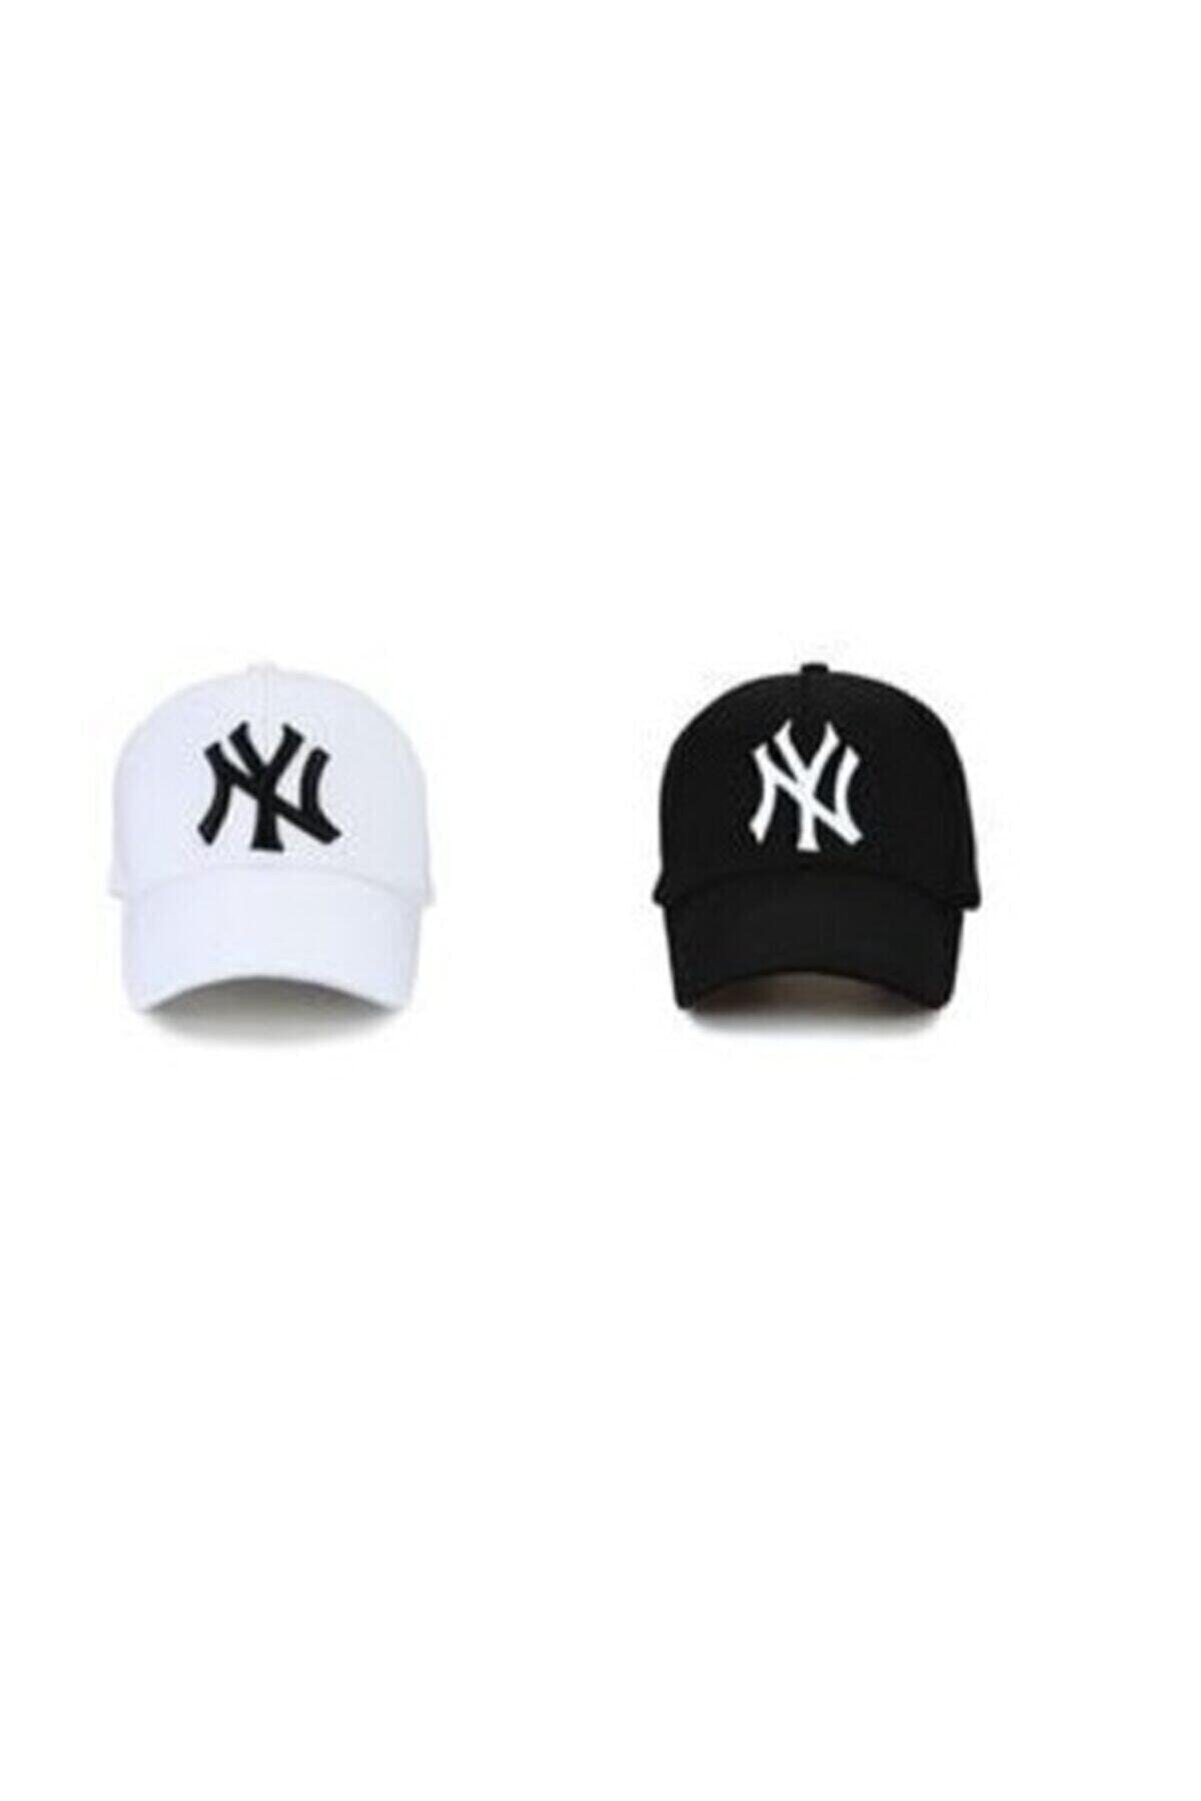 QUATEX Ny New York 2'li Unisex Set Şapka